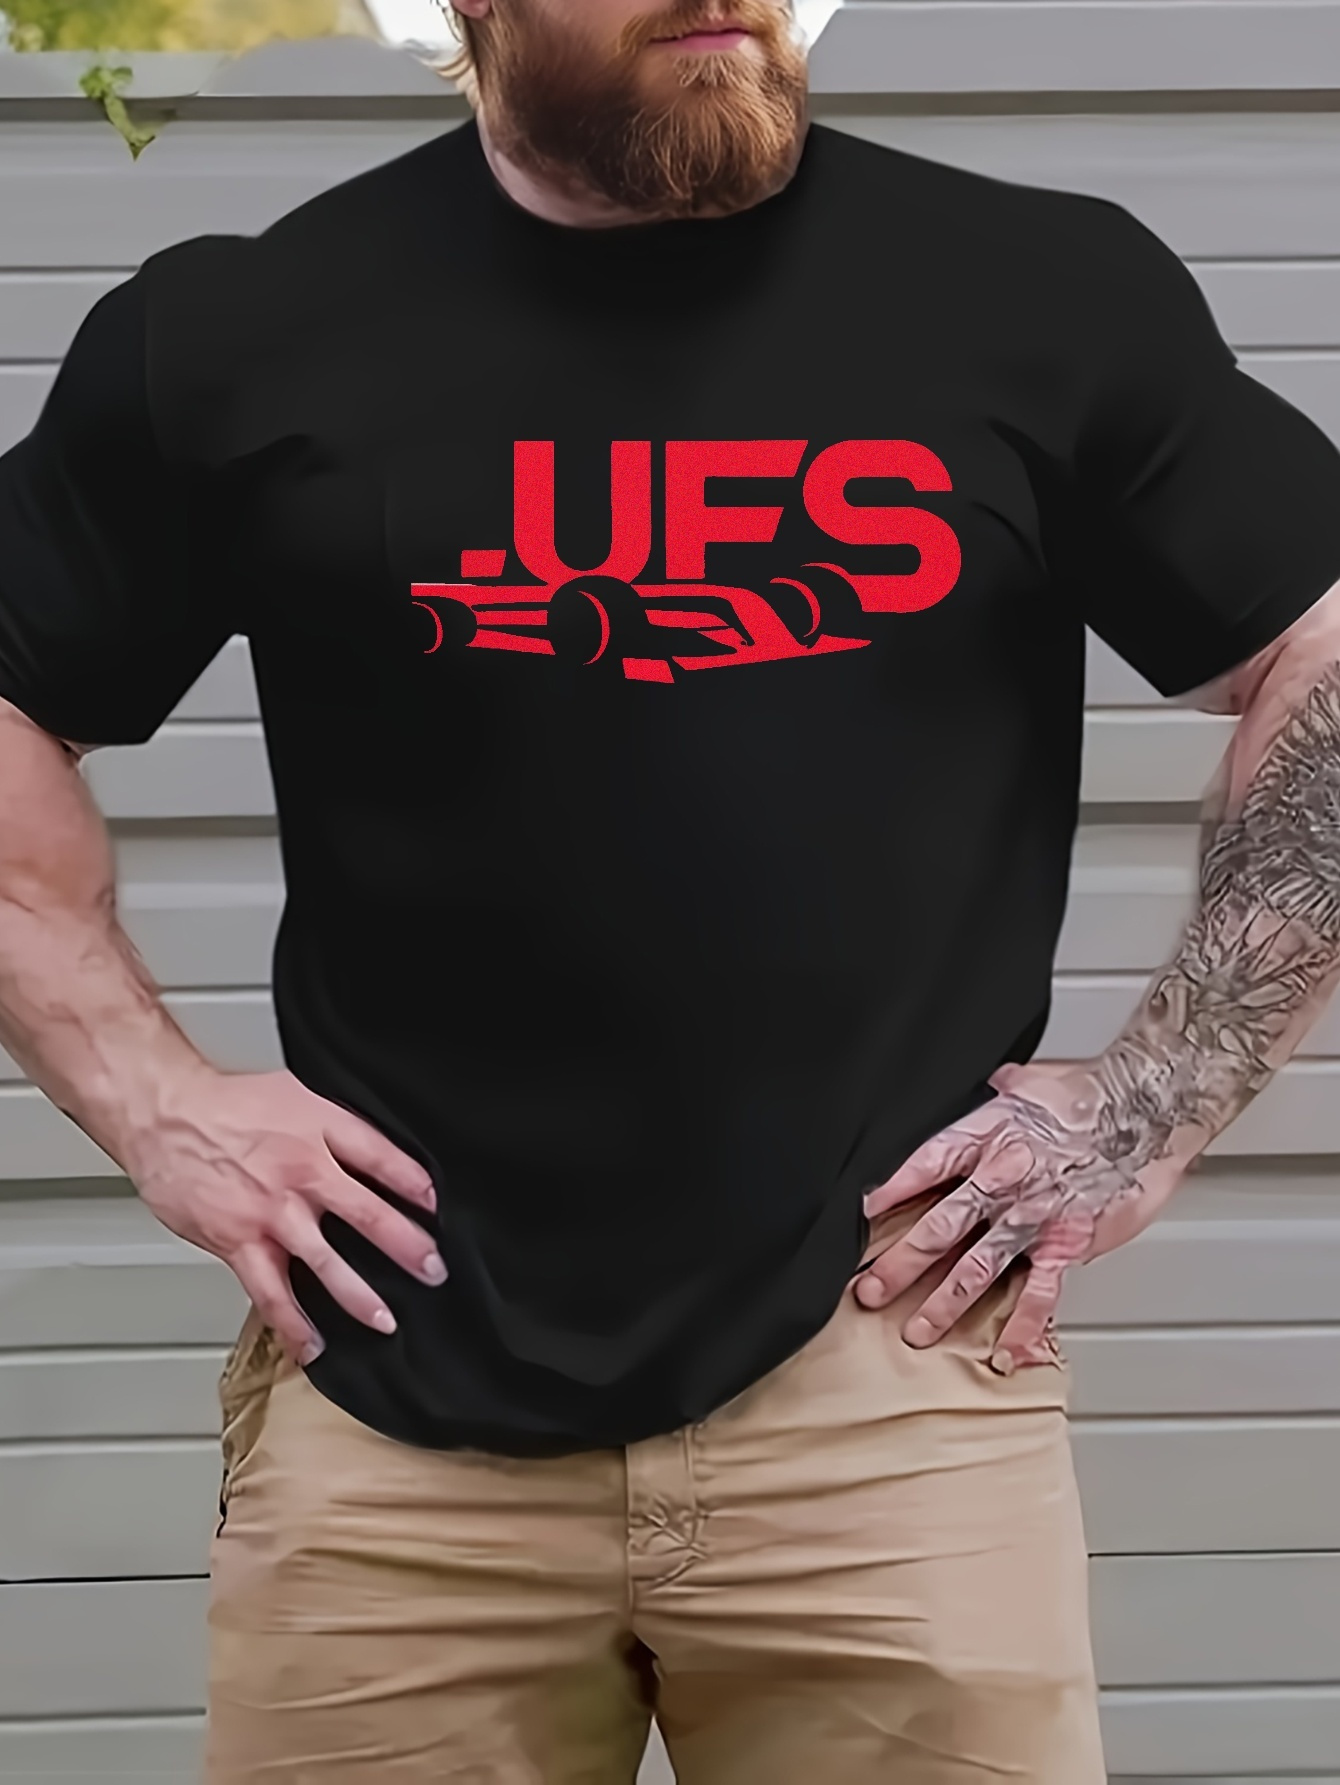 UFC T-Shirts, Jerseys & Clothing For Men